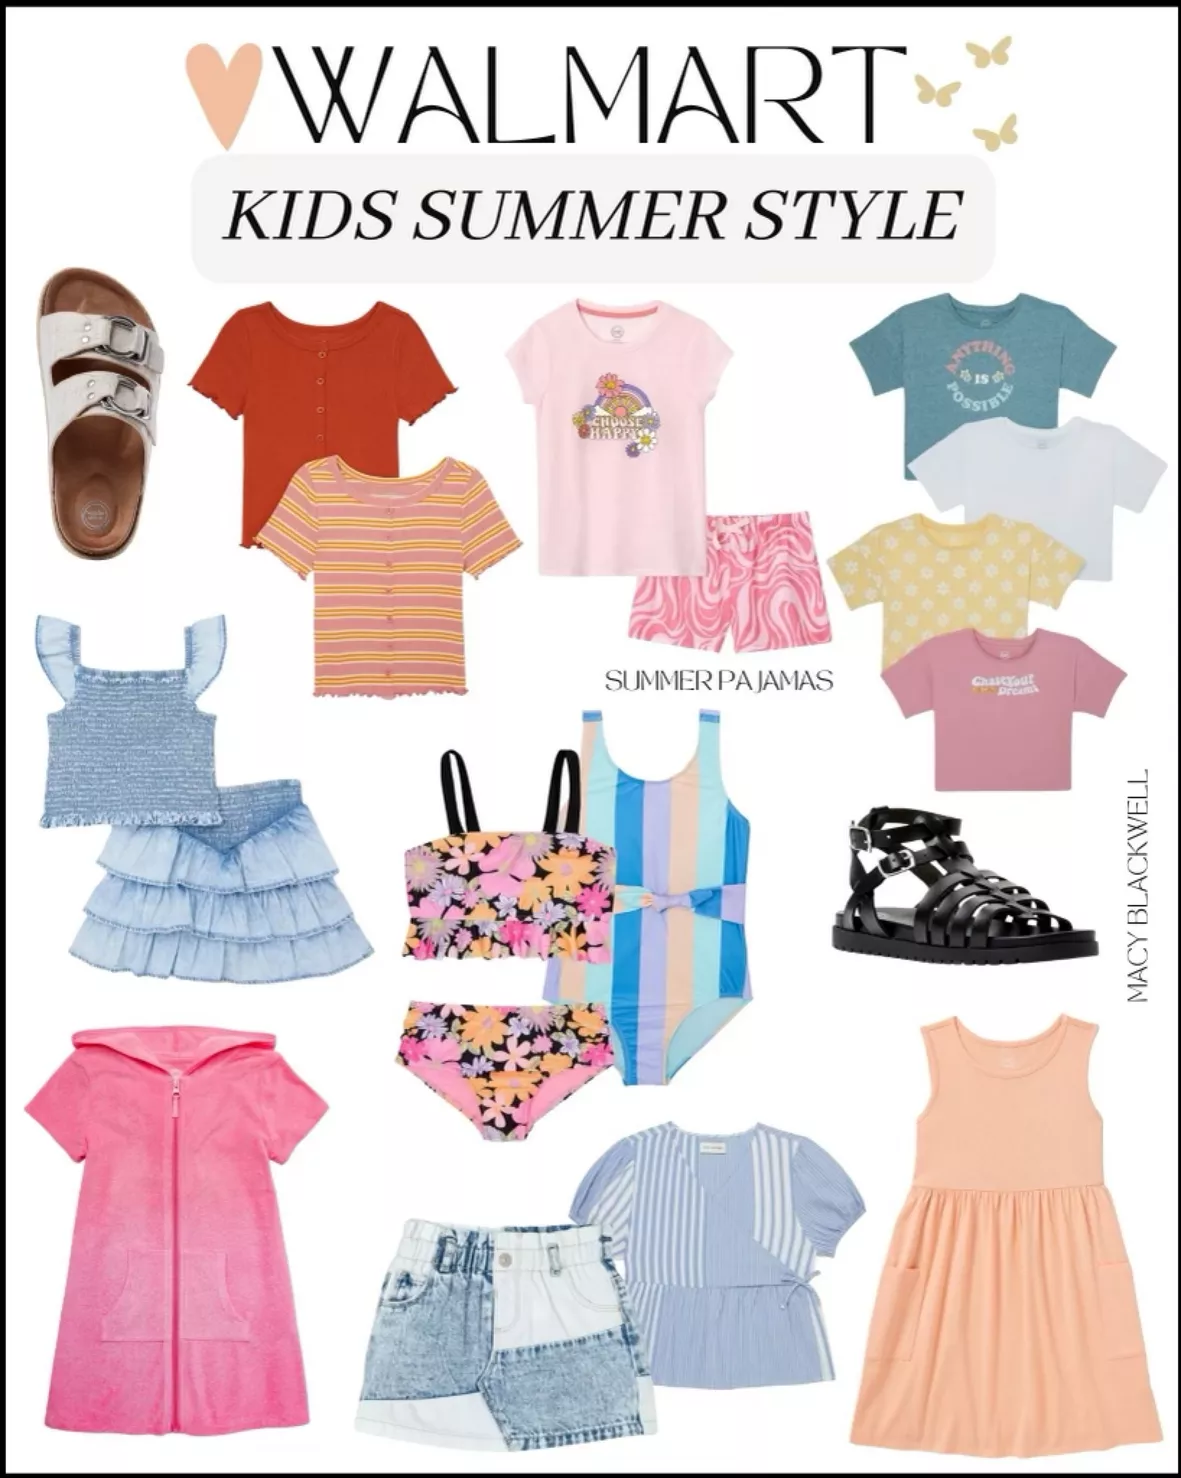 Kids' Clothes - Macy's